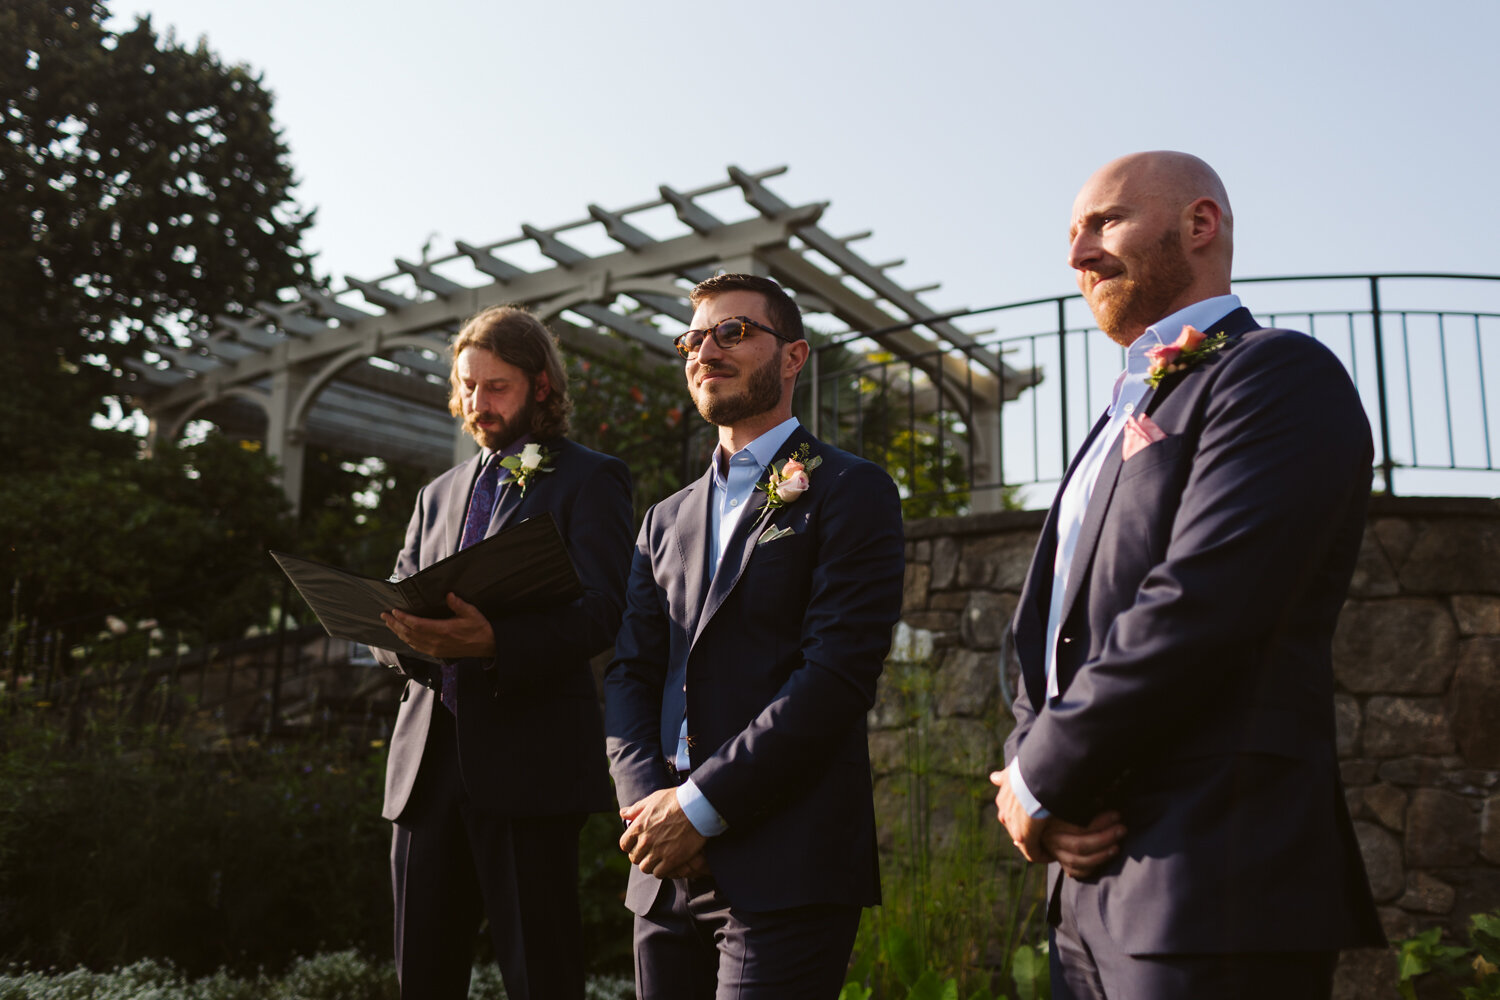 Wedding Photos at Tower Hill Botanic Garden-11.jpg